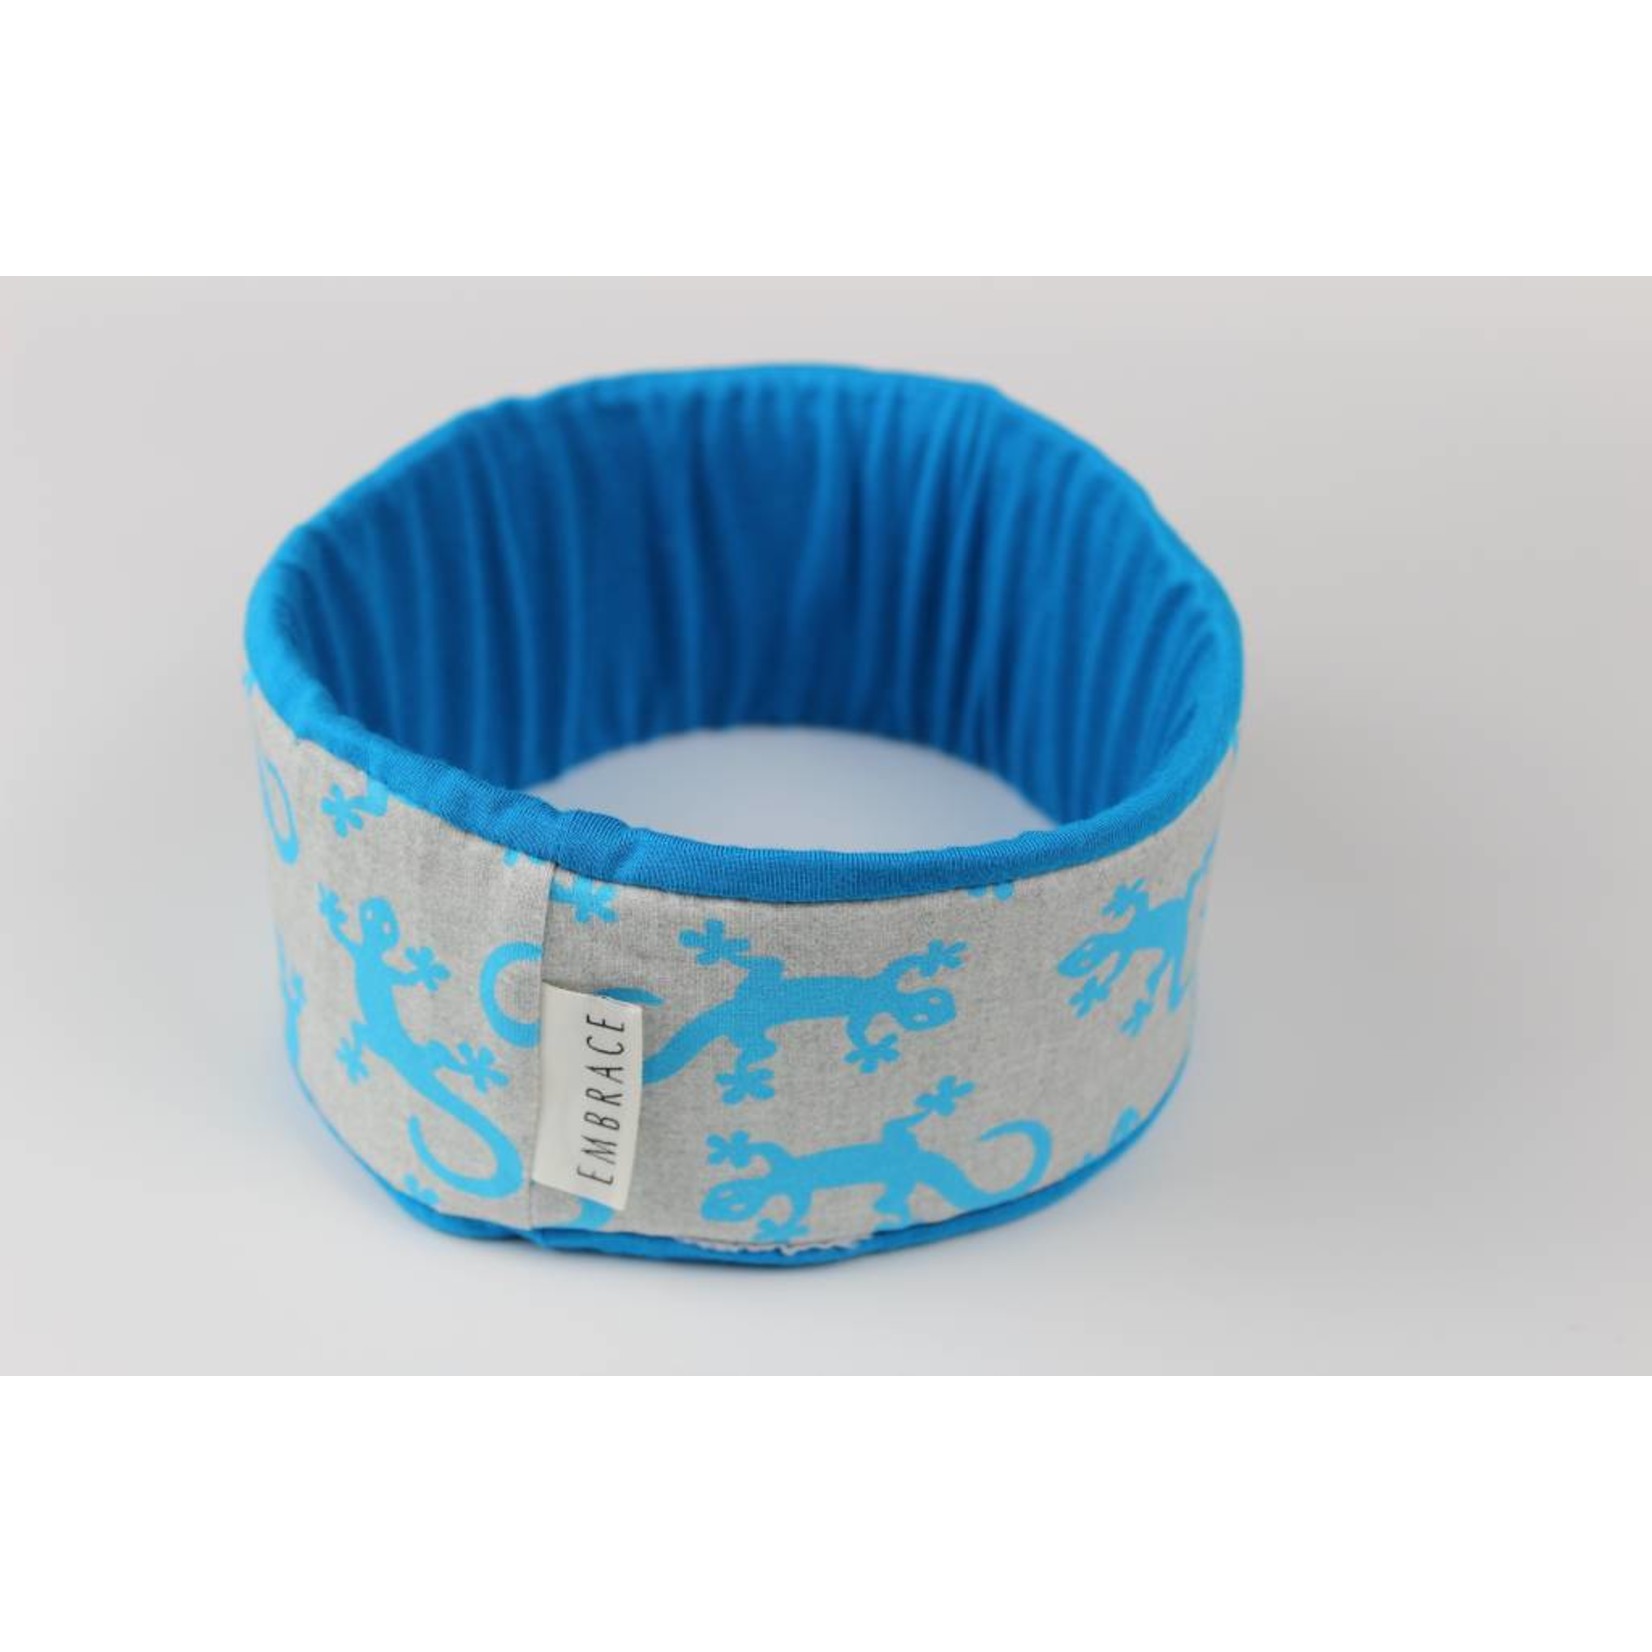 Headband "Salamandra" printed with blue geckos